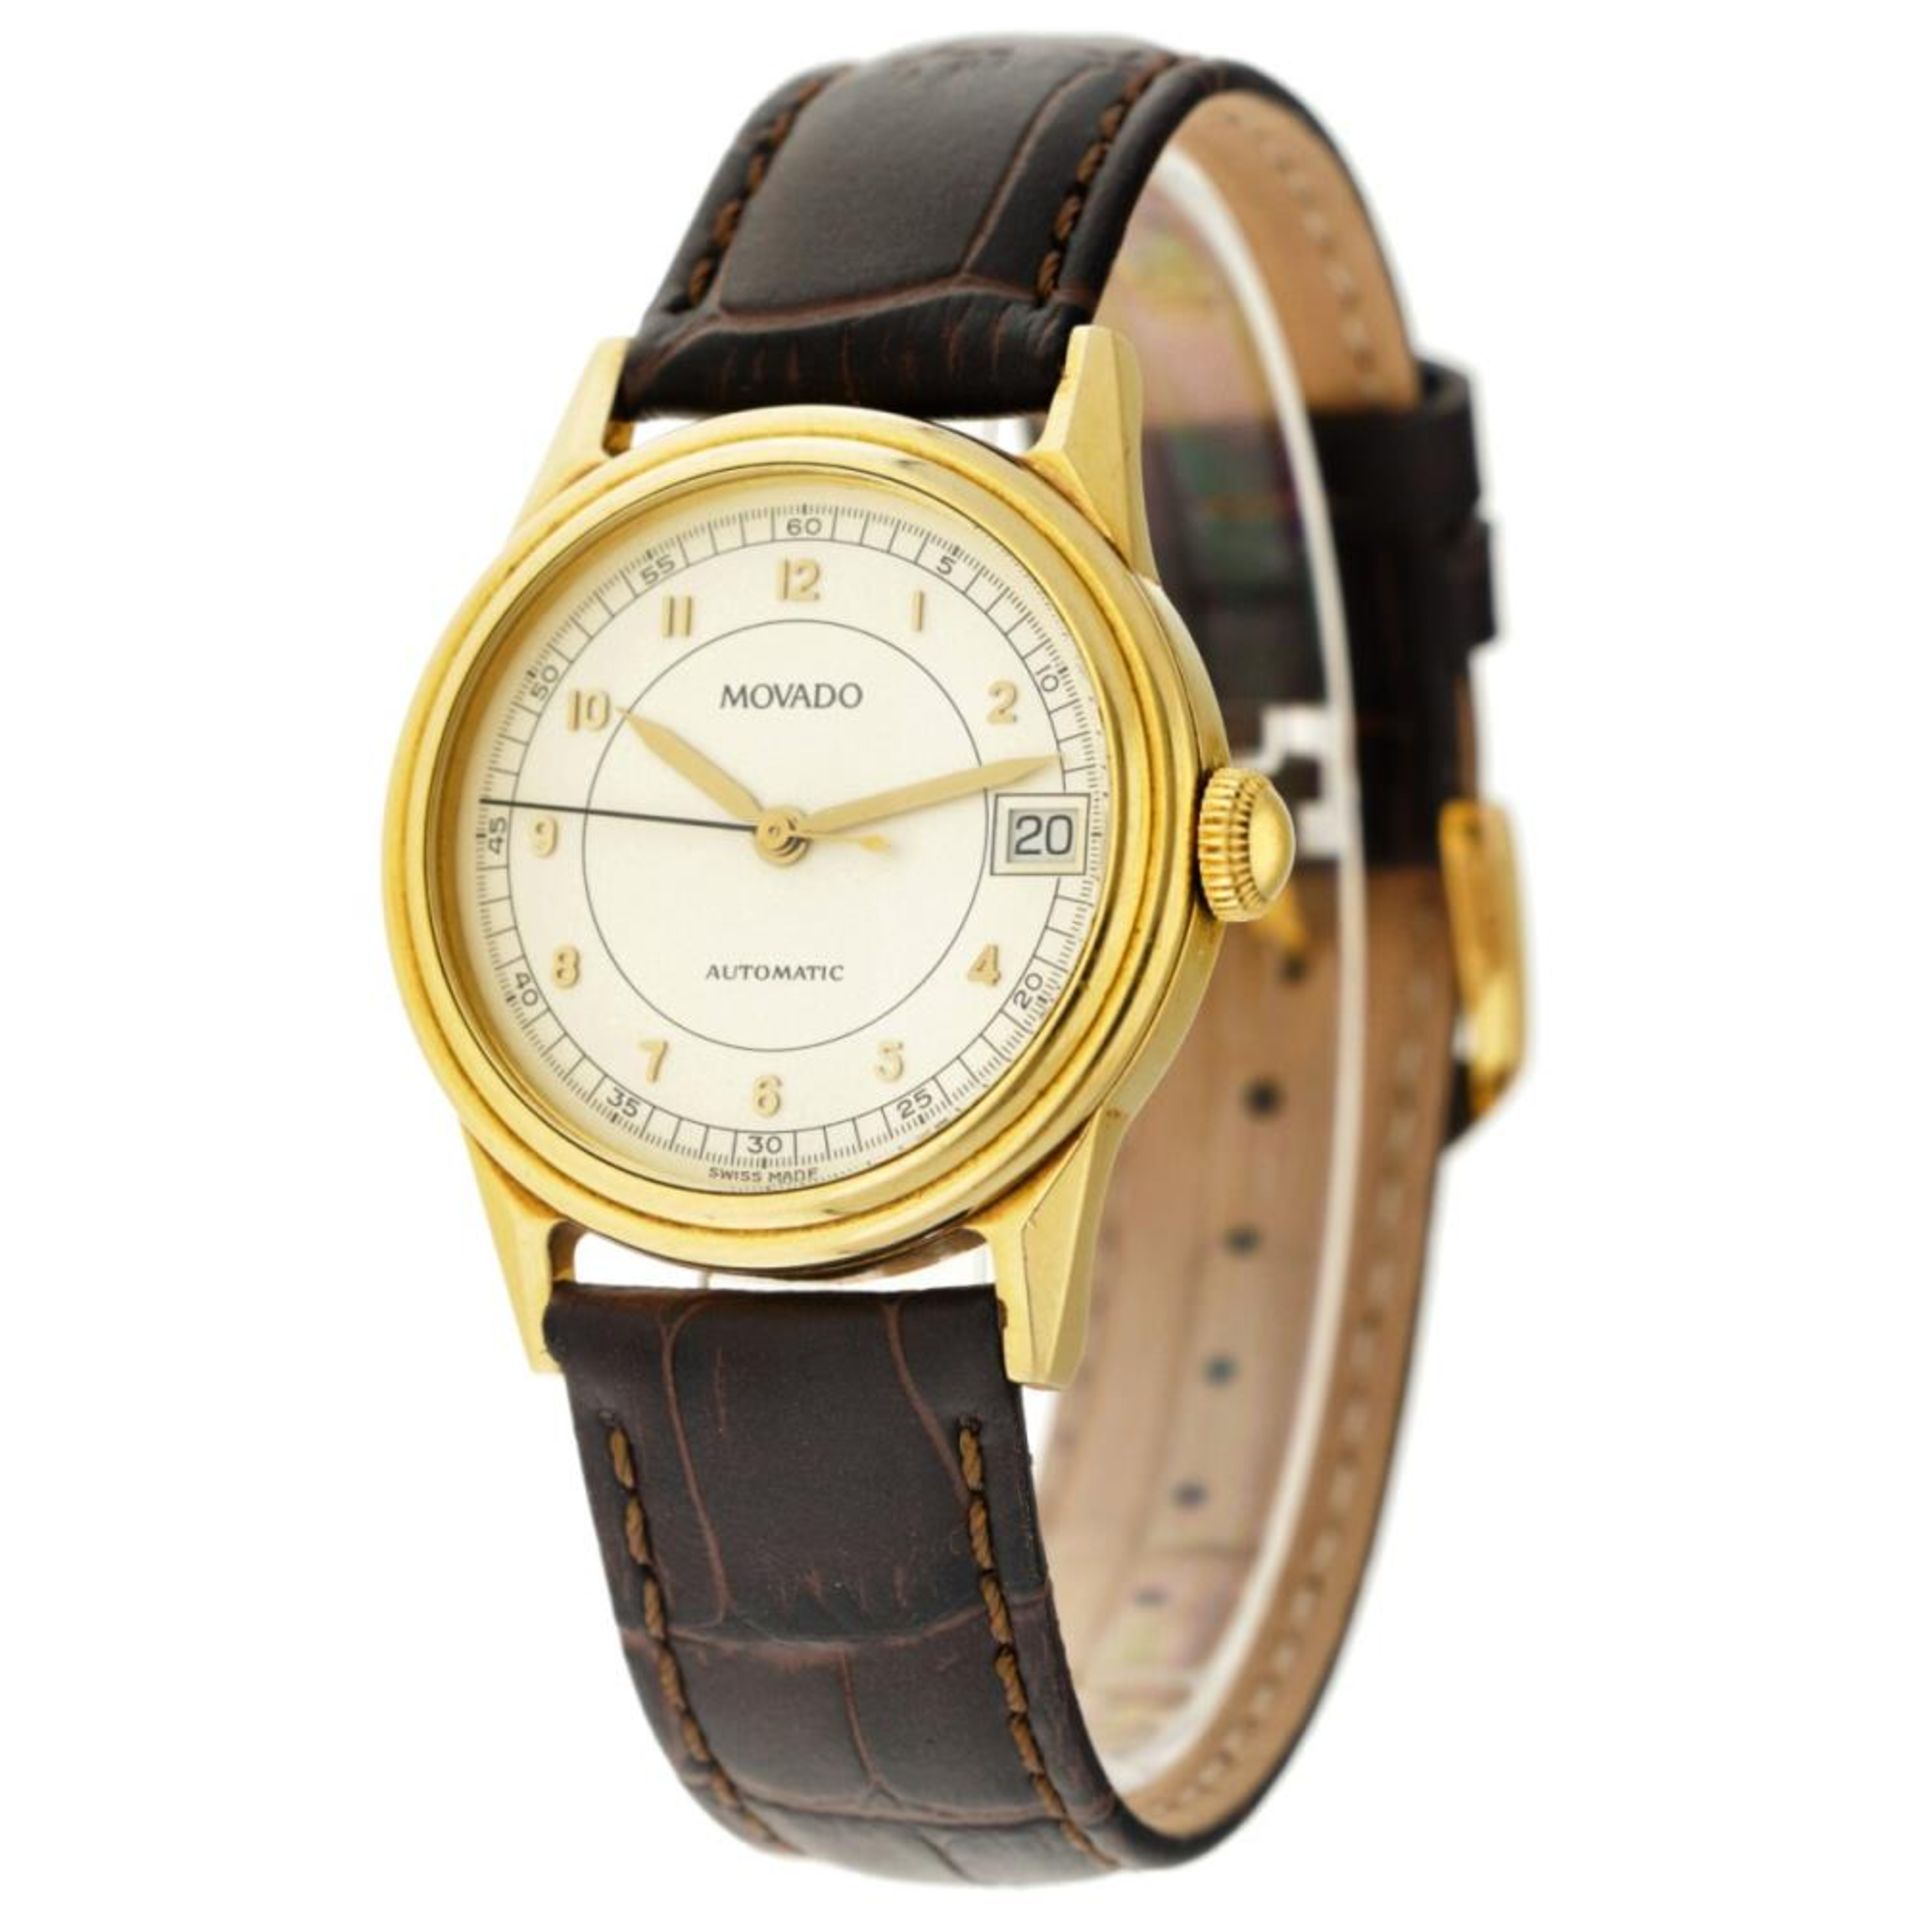 Movado 1881 40.A9.880 - Men's watch - approx. 2002. - Bild 2 aus 5